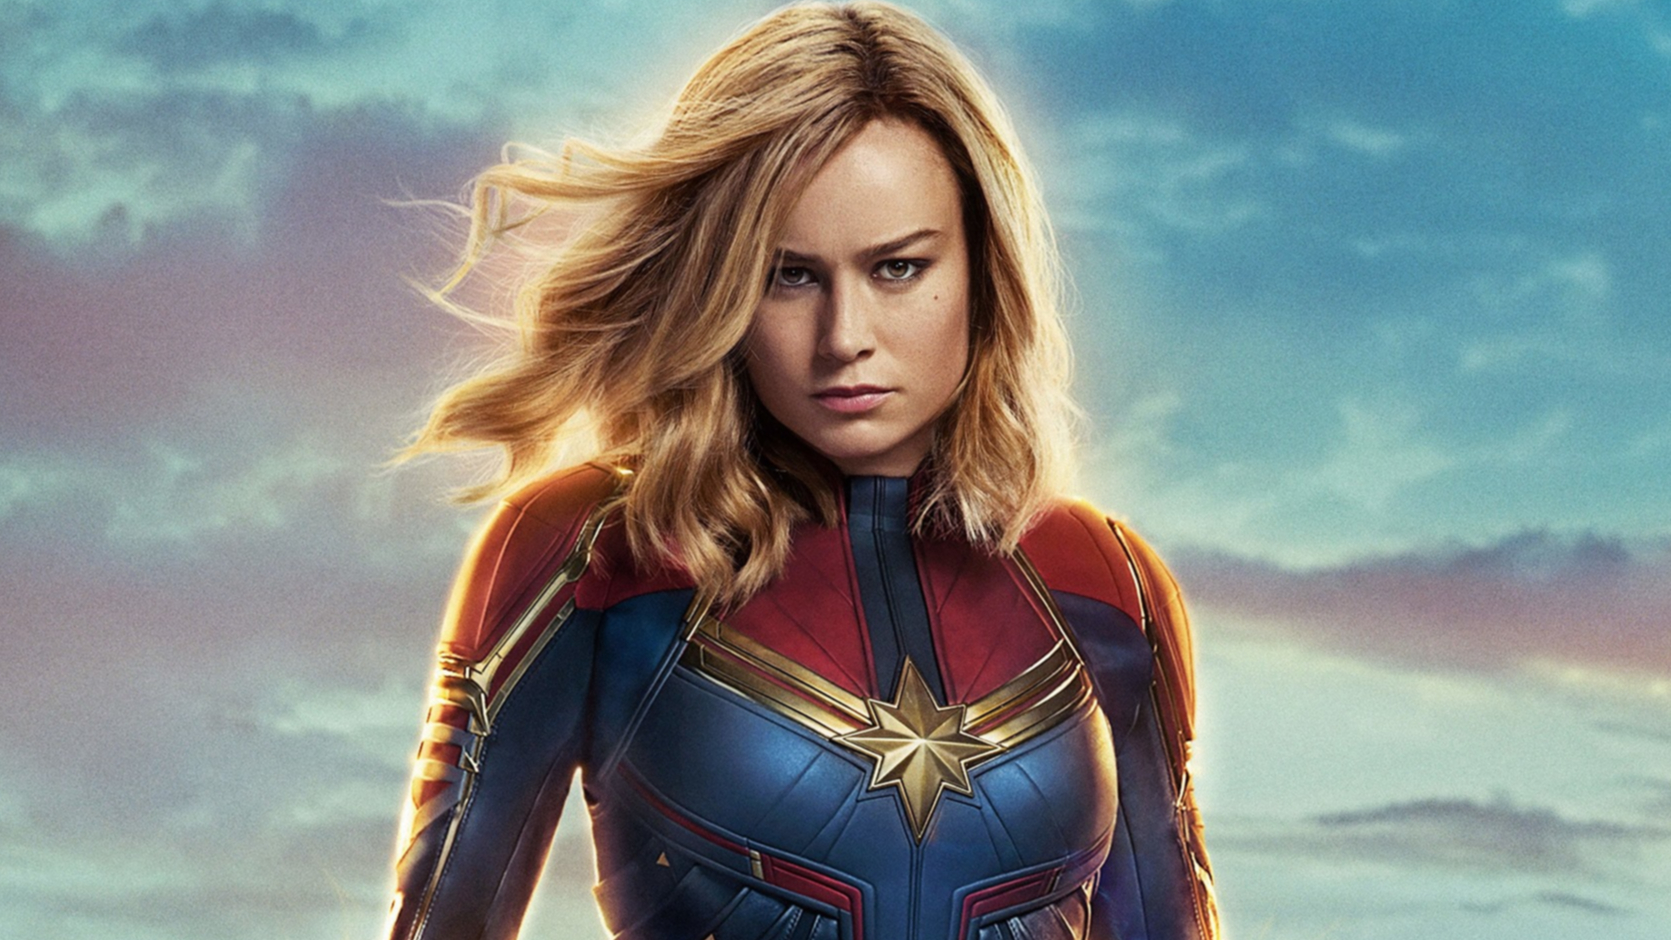 Exclusive: Marvel Plans To Replace Brie Larson's Captain Marvel